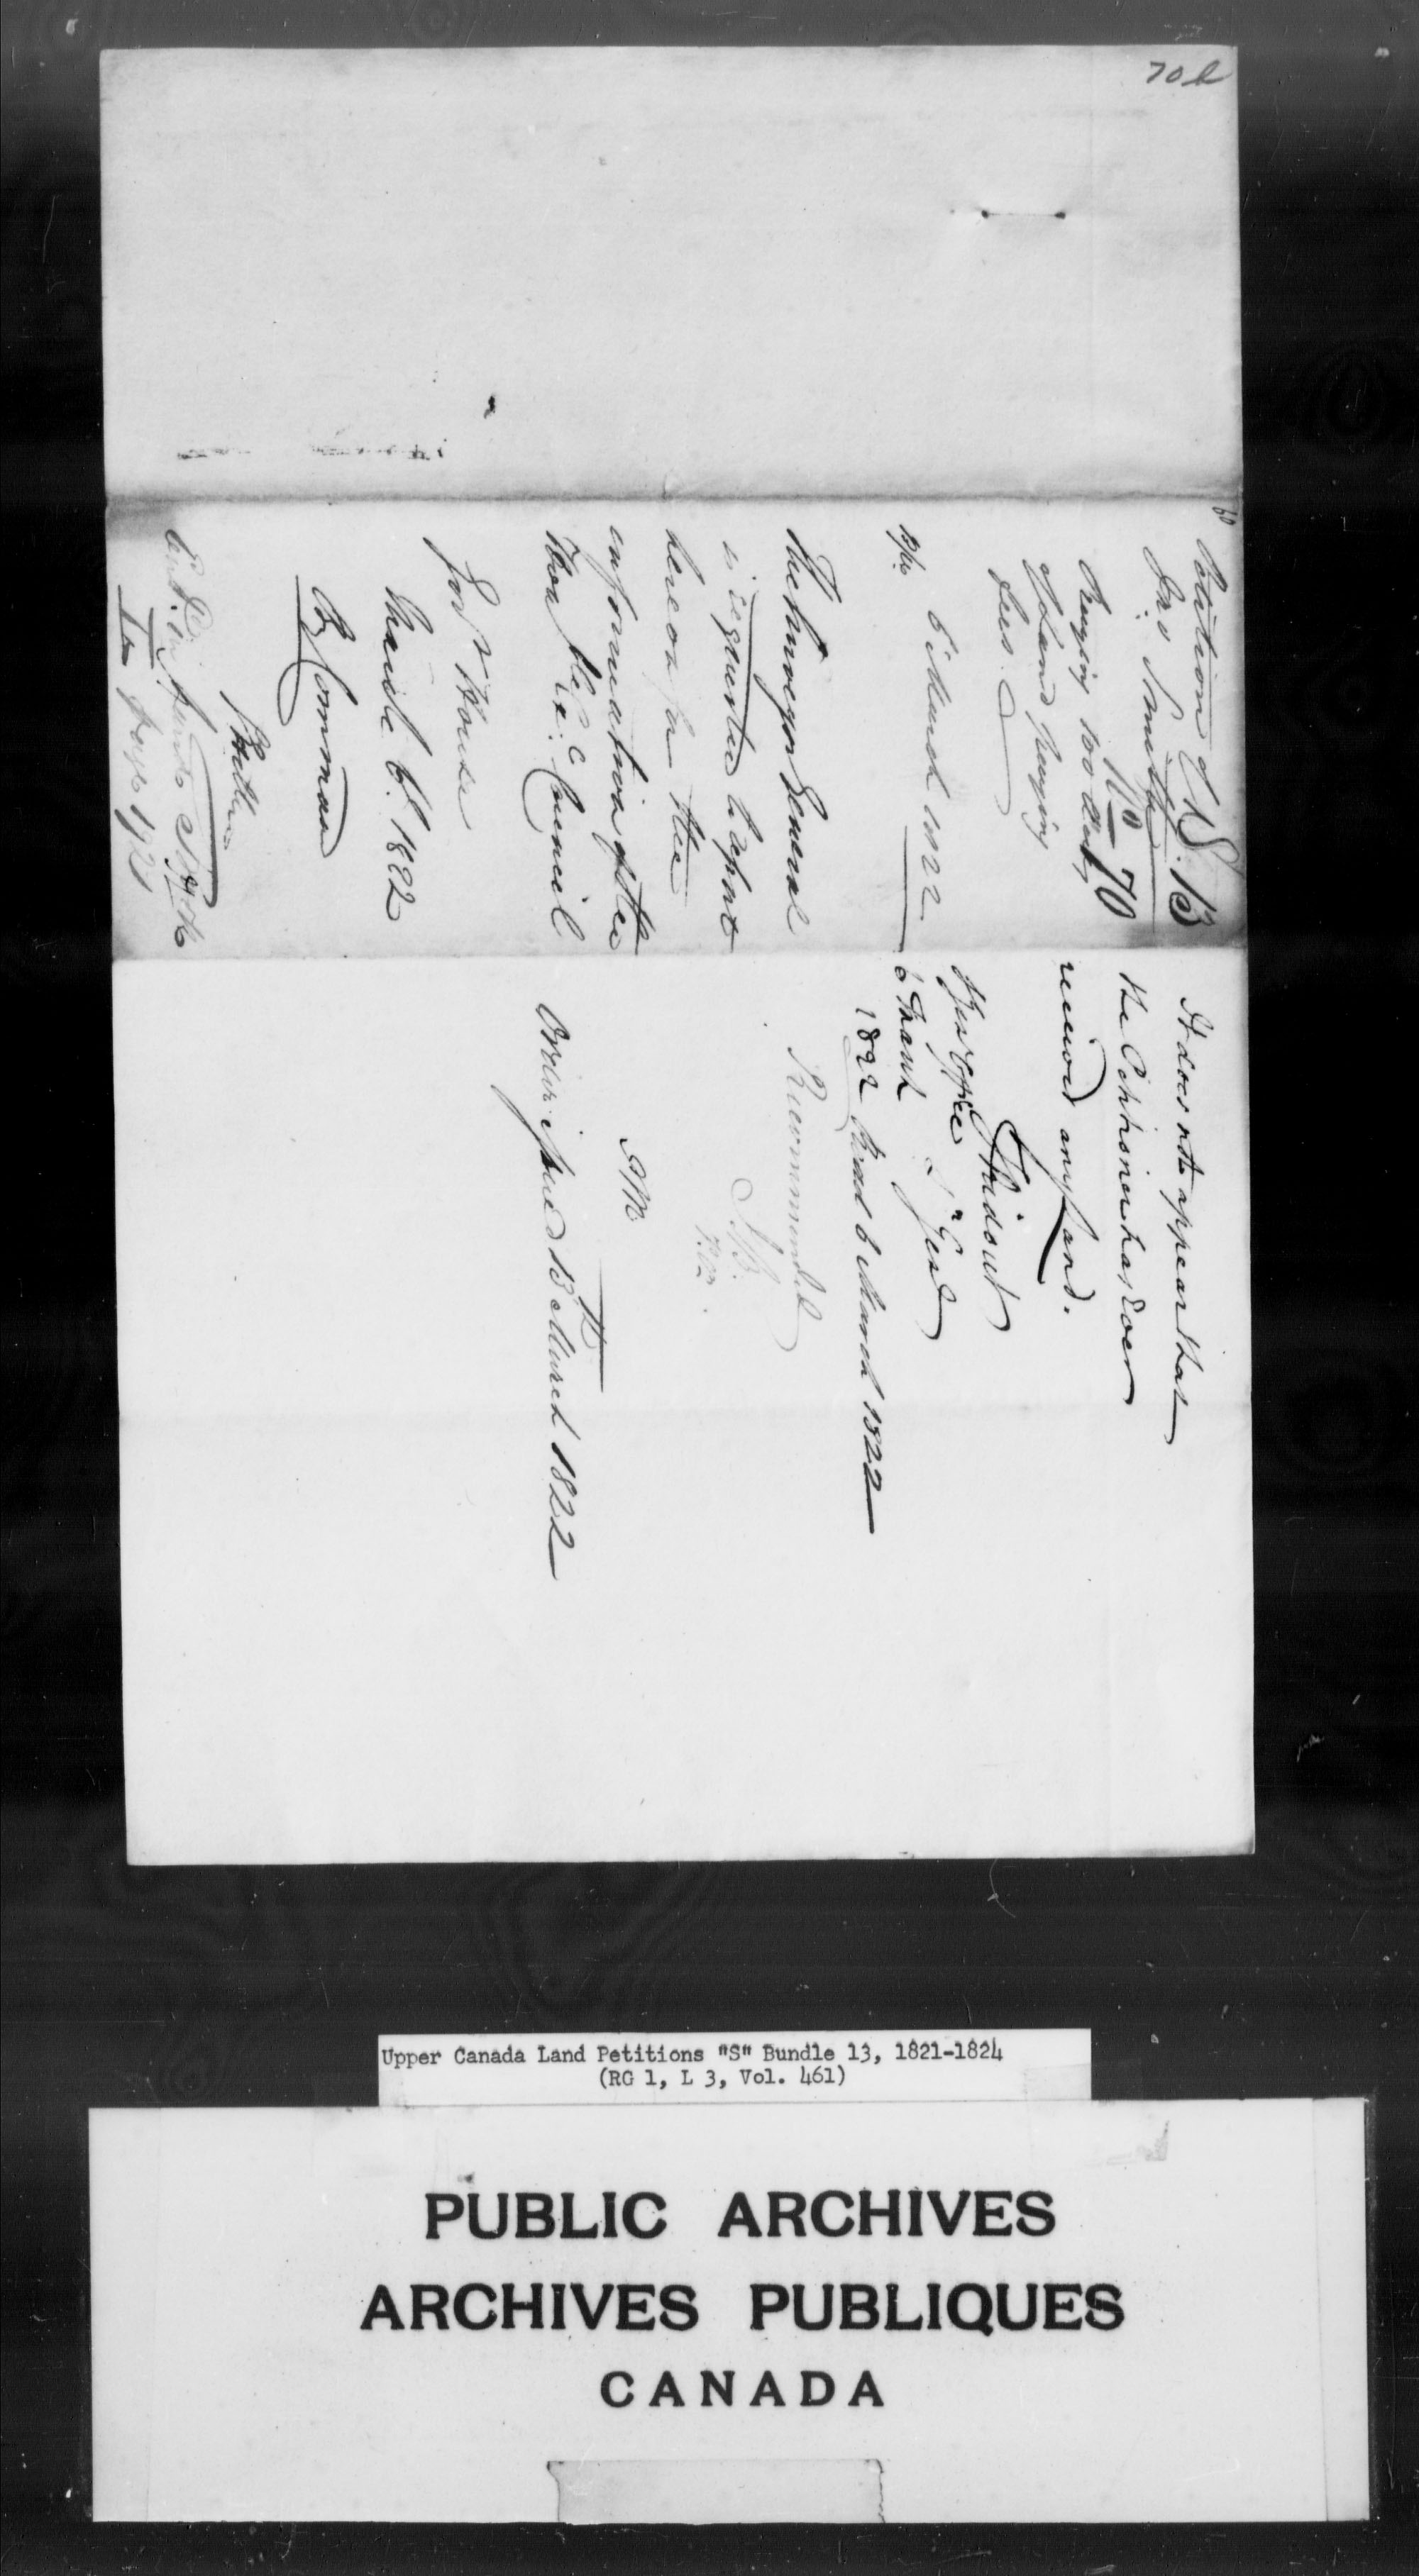 Titre : Demandes de terres du Haut-Canada (1763-1865) - N d'enregistrement Mikan : 205131 - Microforme : c-2813